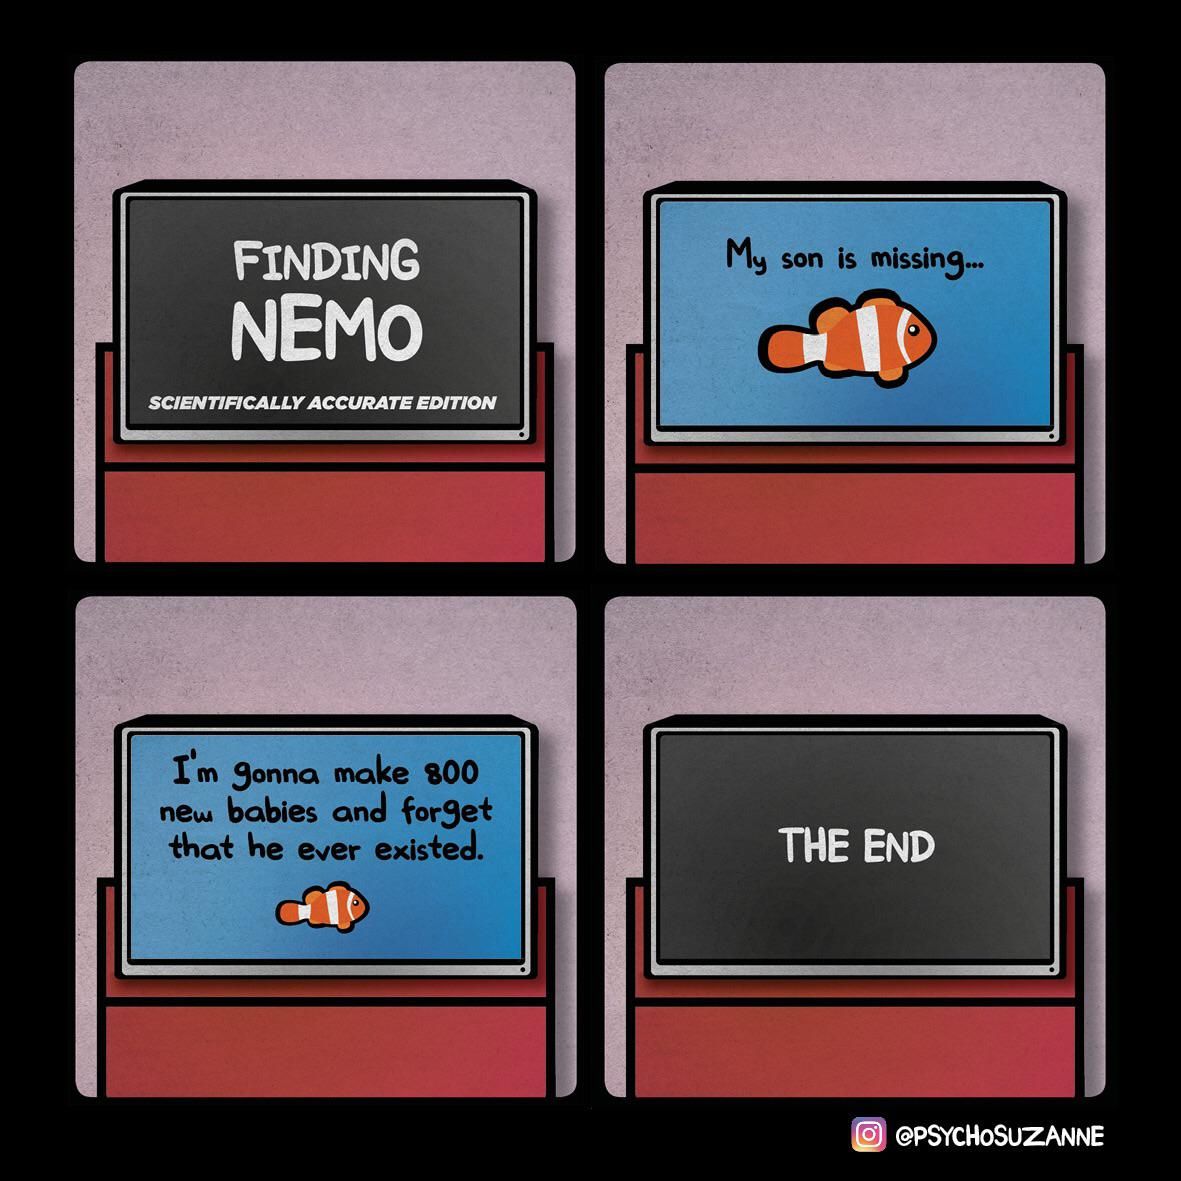 Who’s Nemo?